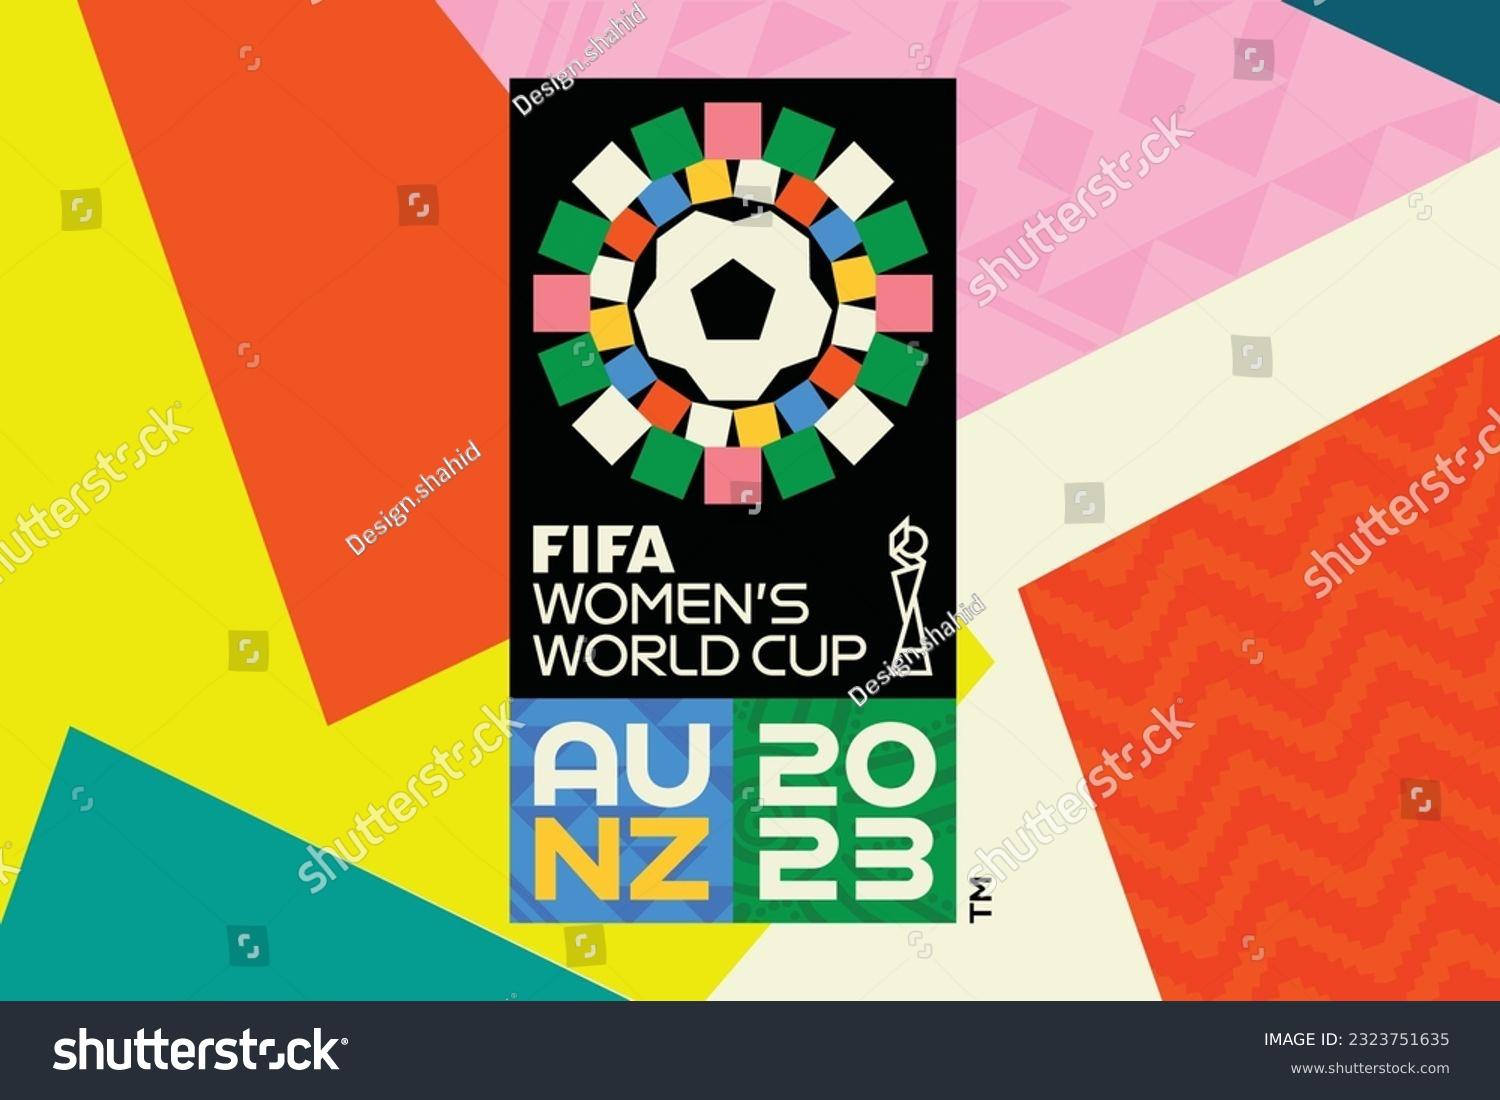 Fifa Womens World Cup Image Stock Photos Vectors